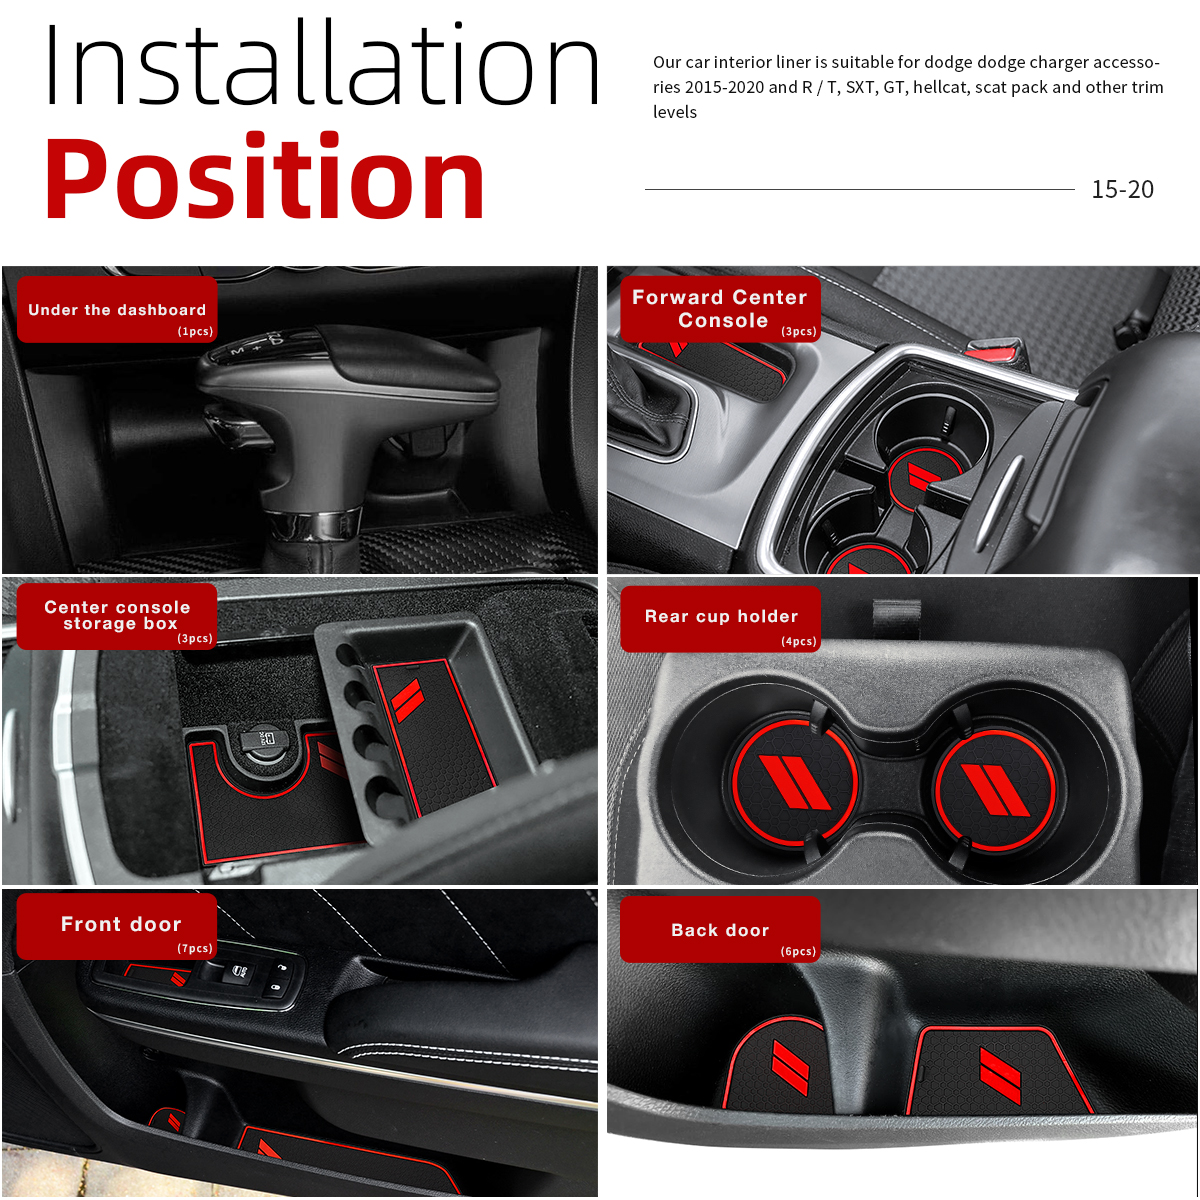 HAMSAM for Dodge Charger Accessories 2015-2021 Non-Slip Anti Dust Cup Holder Inserts 6pcs Set,Black Trim Door Pocket Liners and Center Console Liner Mats Premium Custom Interior 